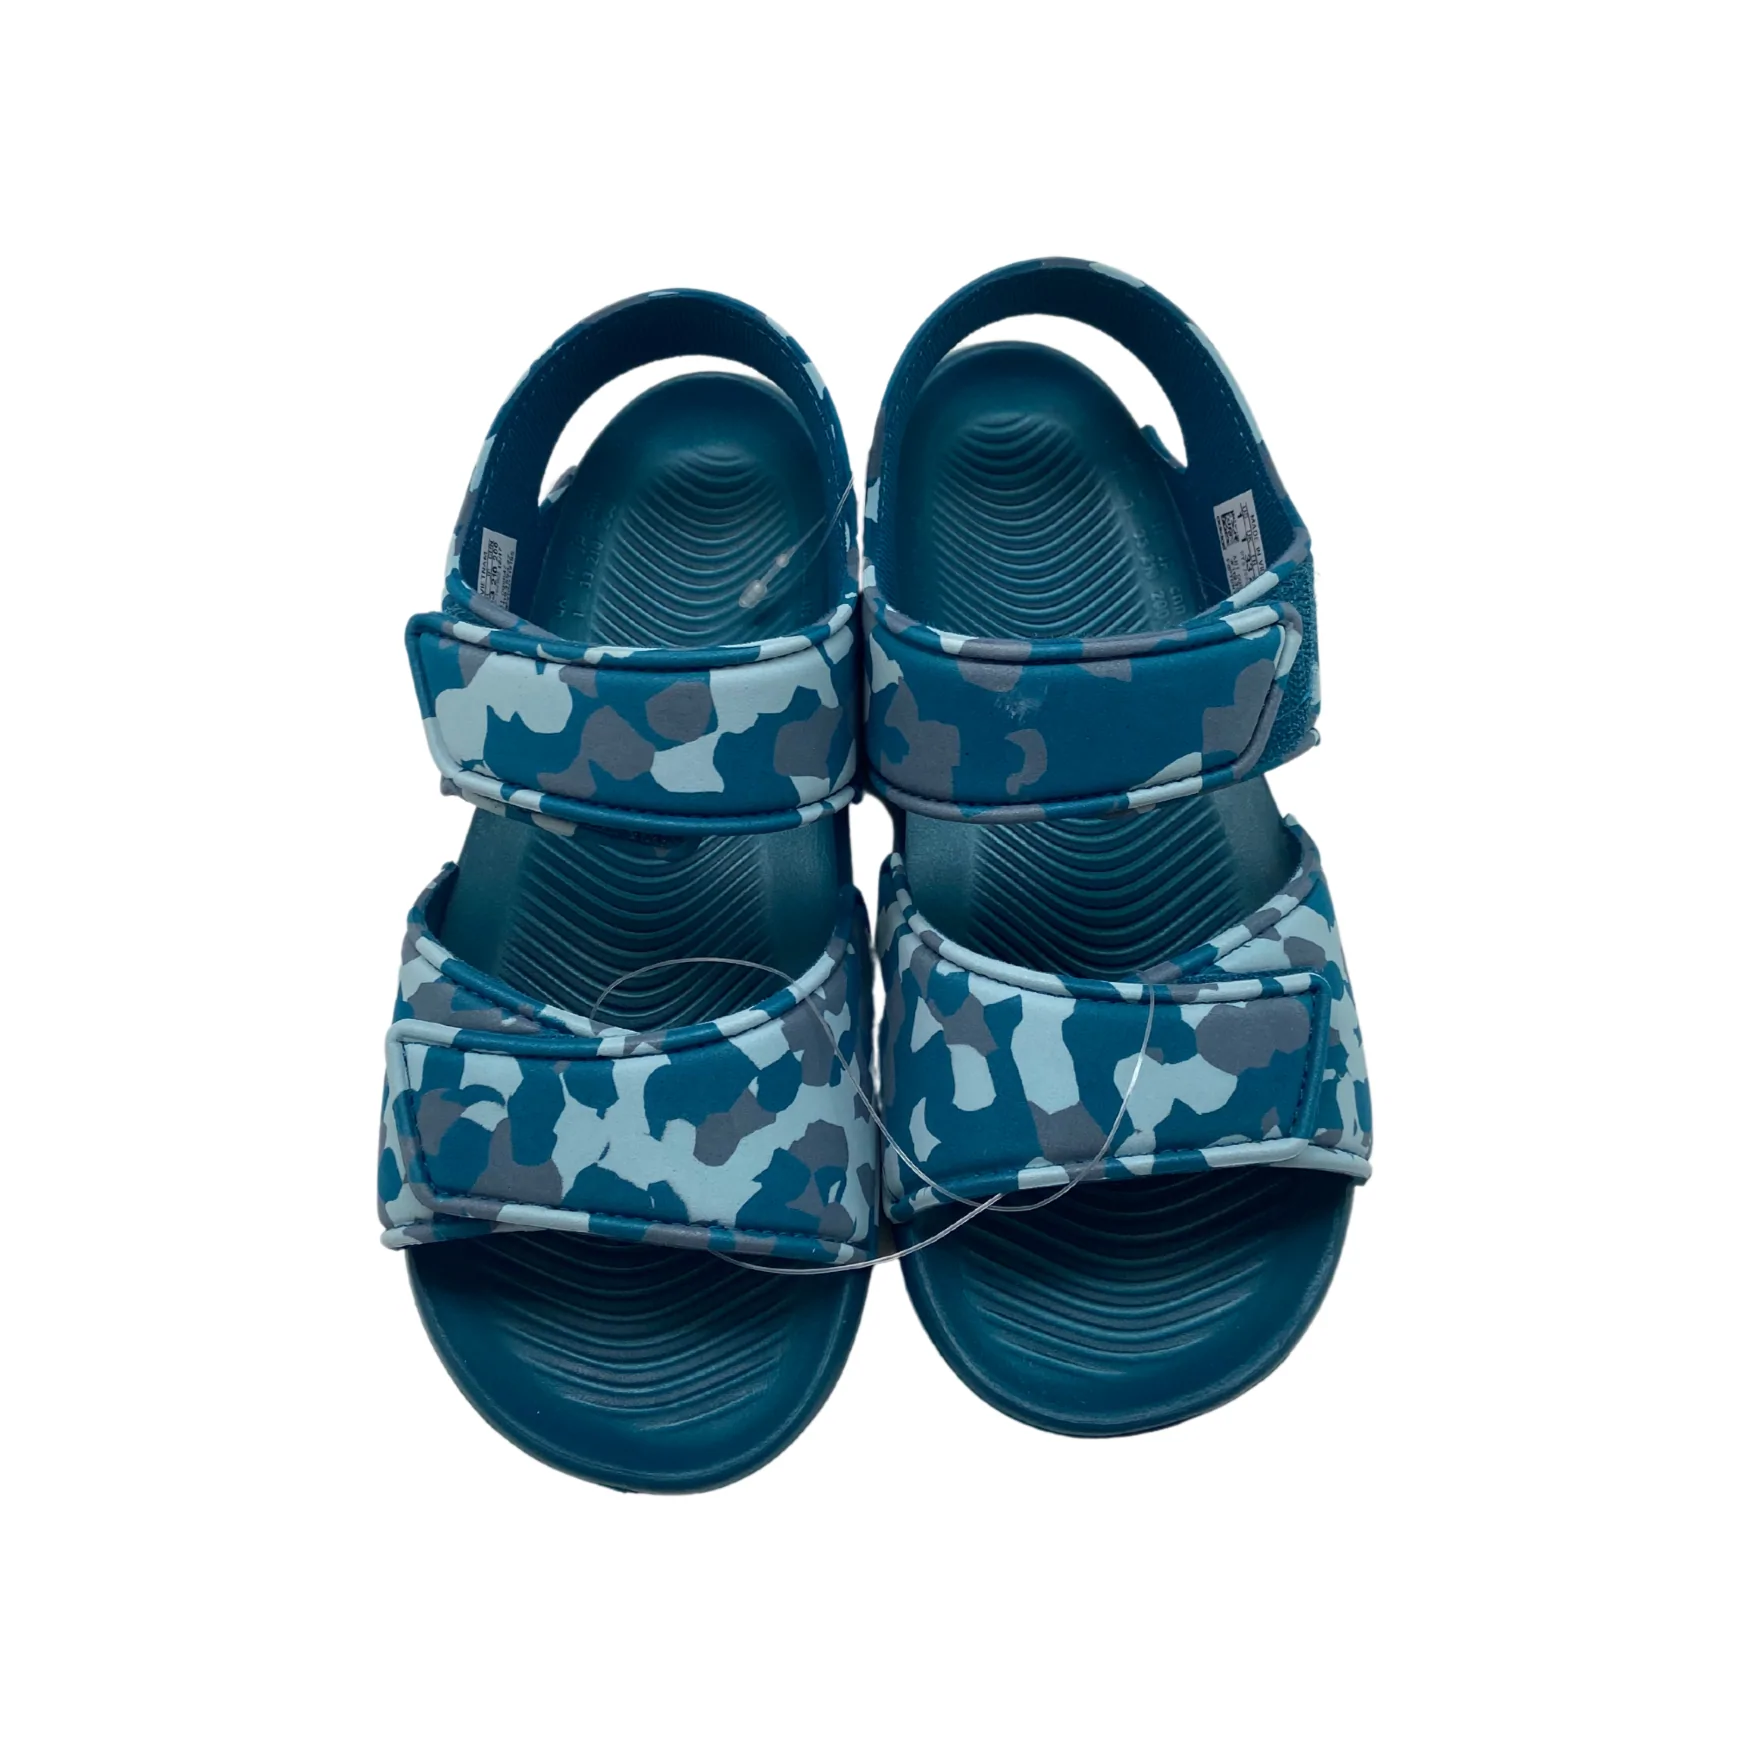 Adidas Kids Sandals / AltaSwim C / Boy's & Girl's / Blue & Grey Camo / Various Sizes